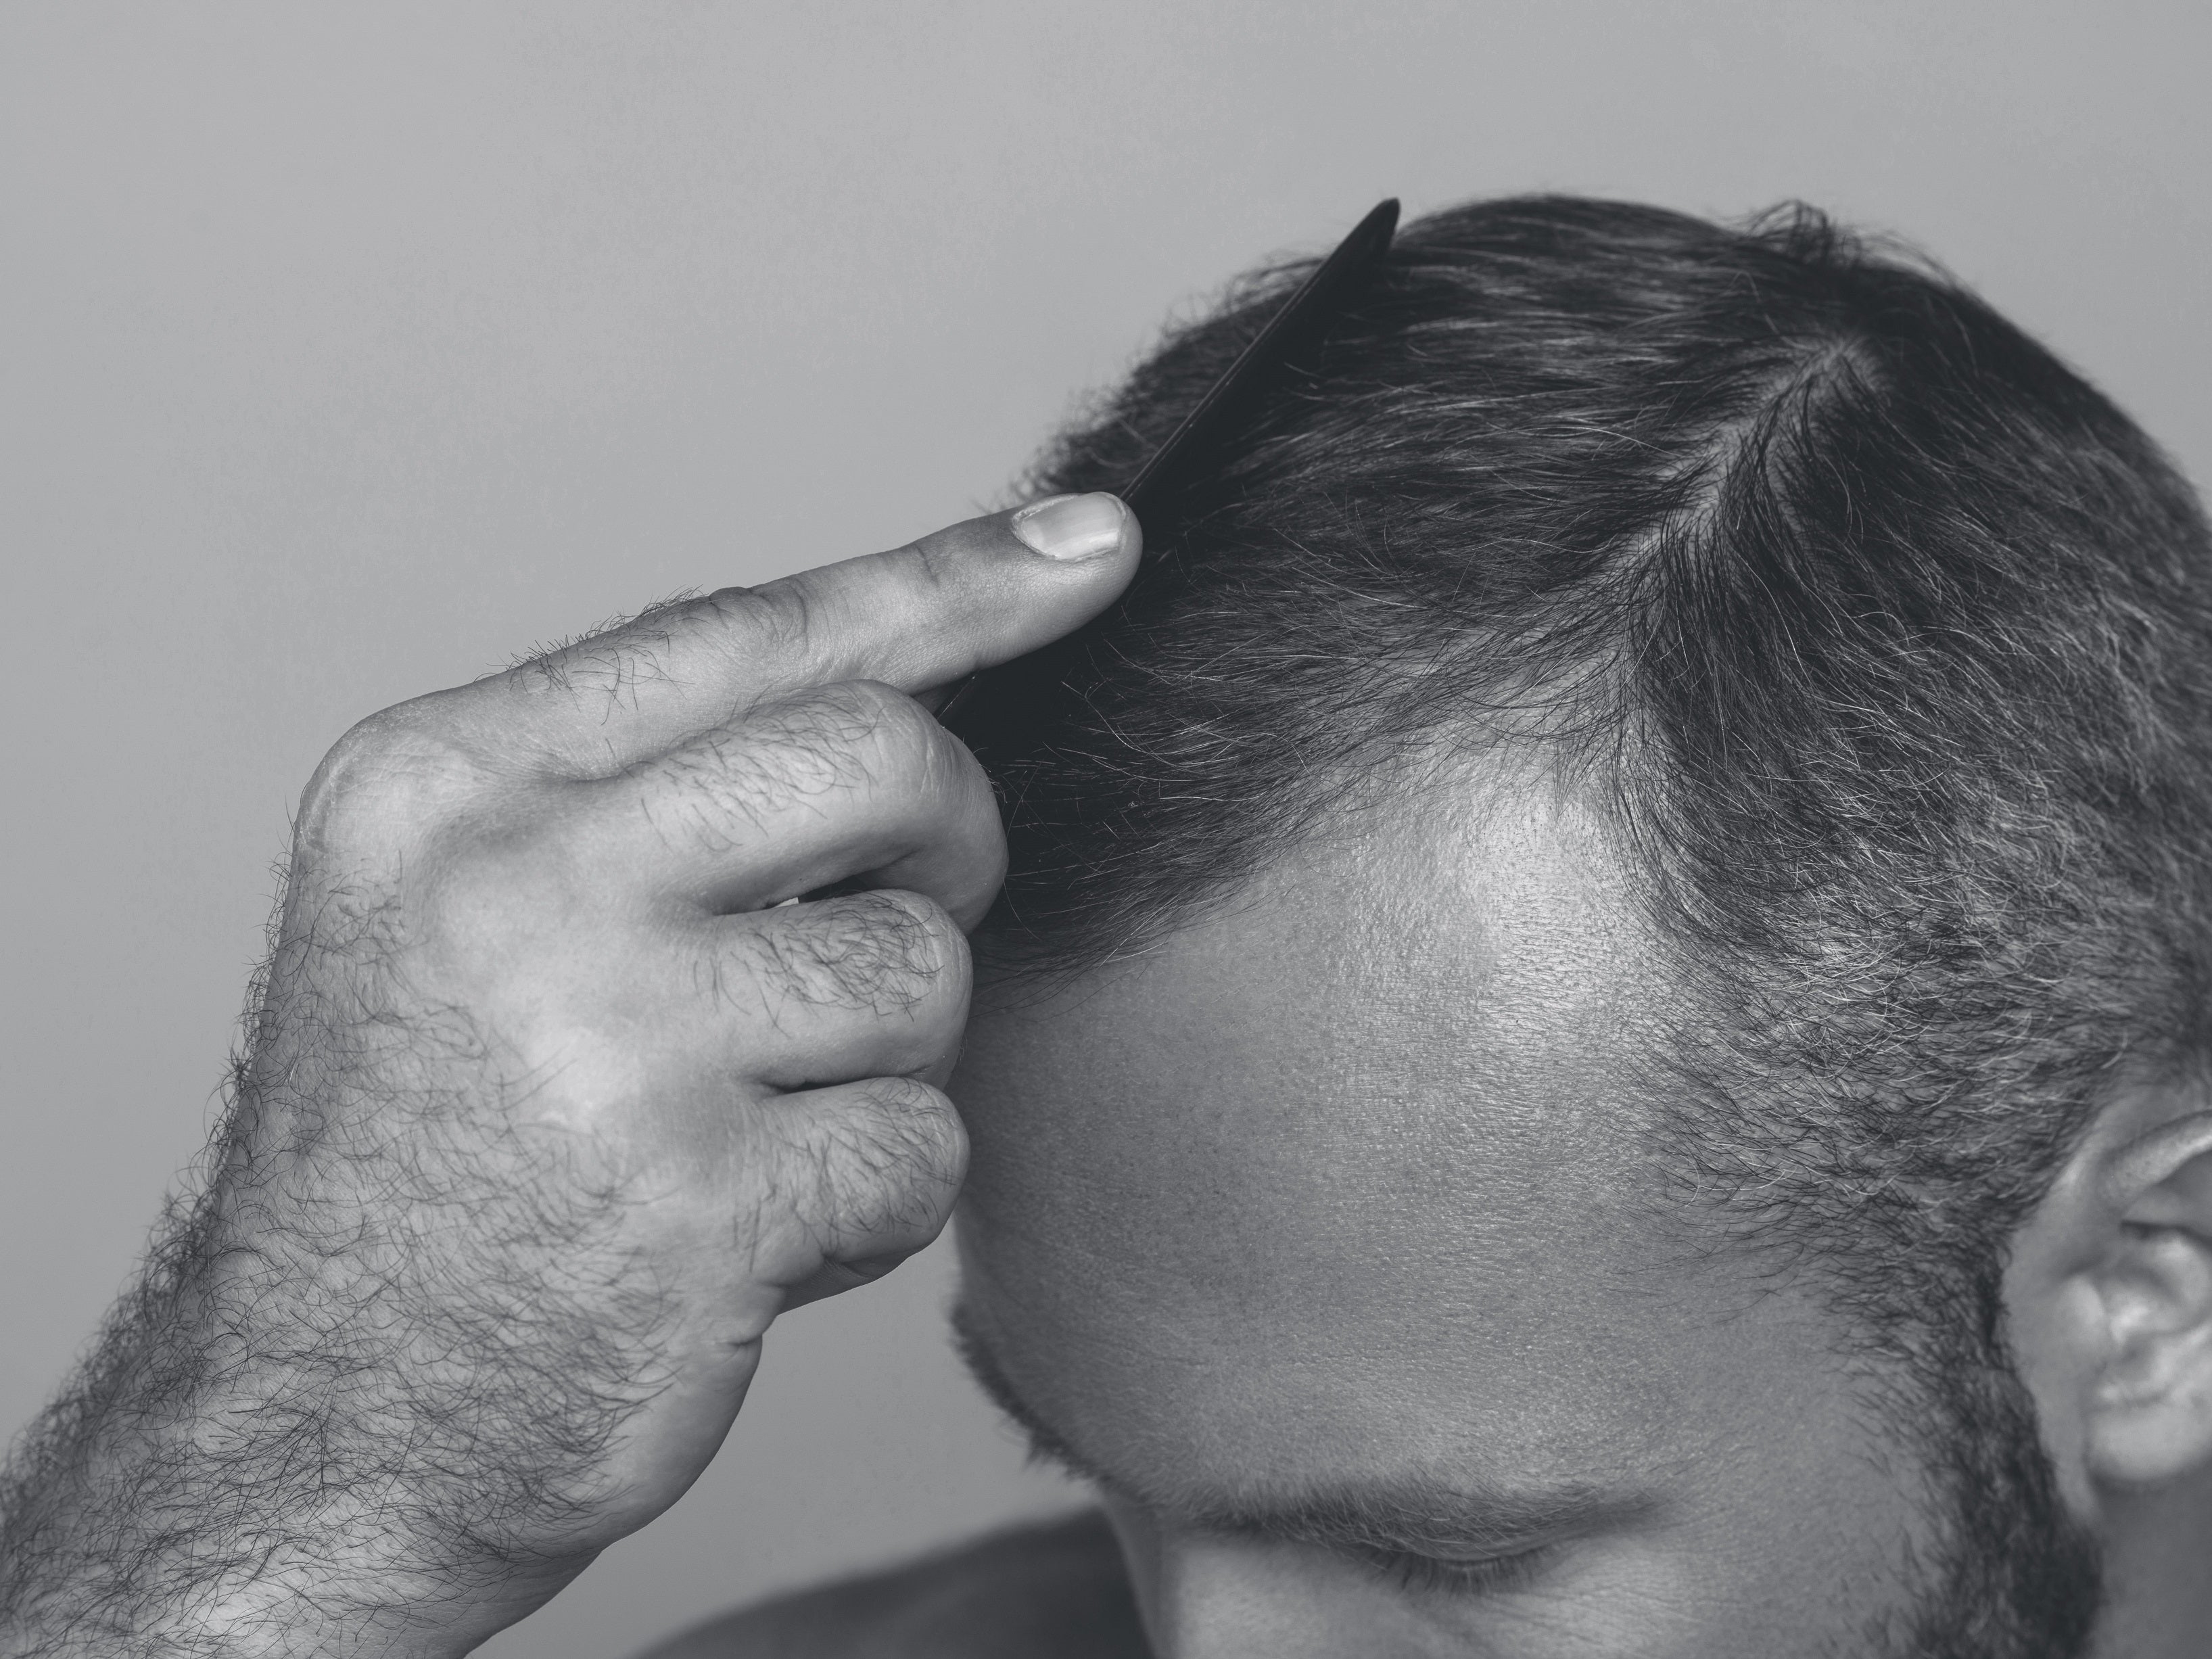 What causes hair loss in men?